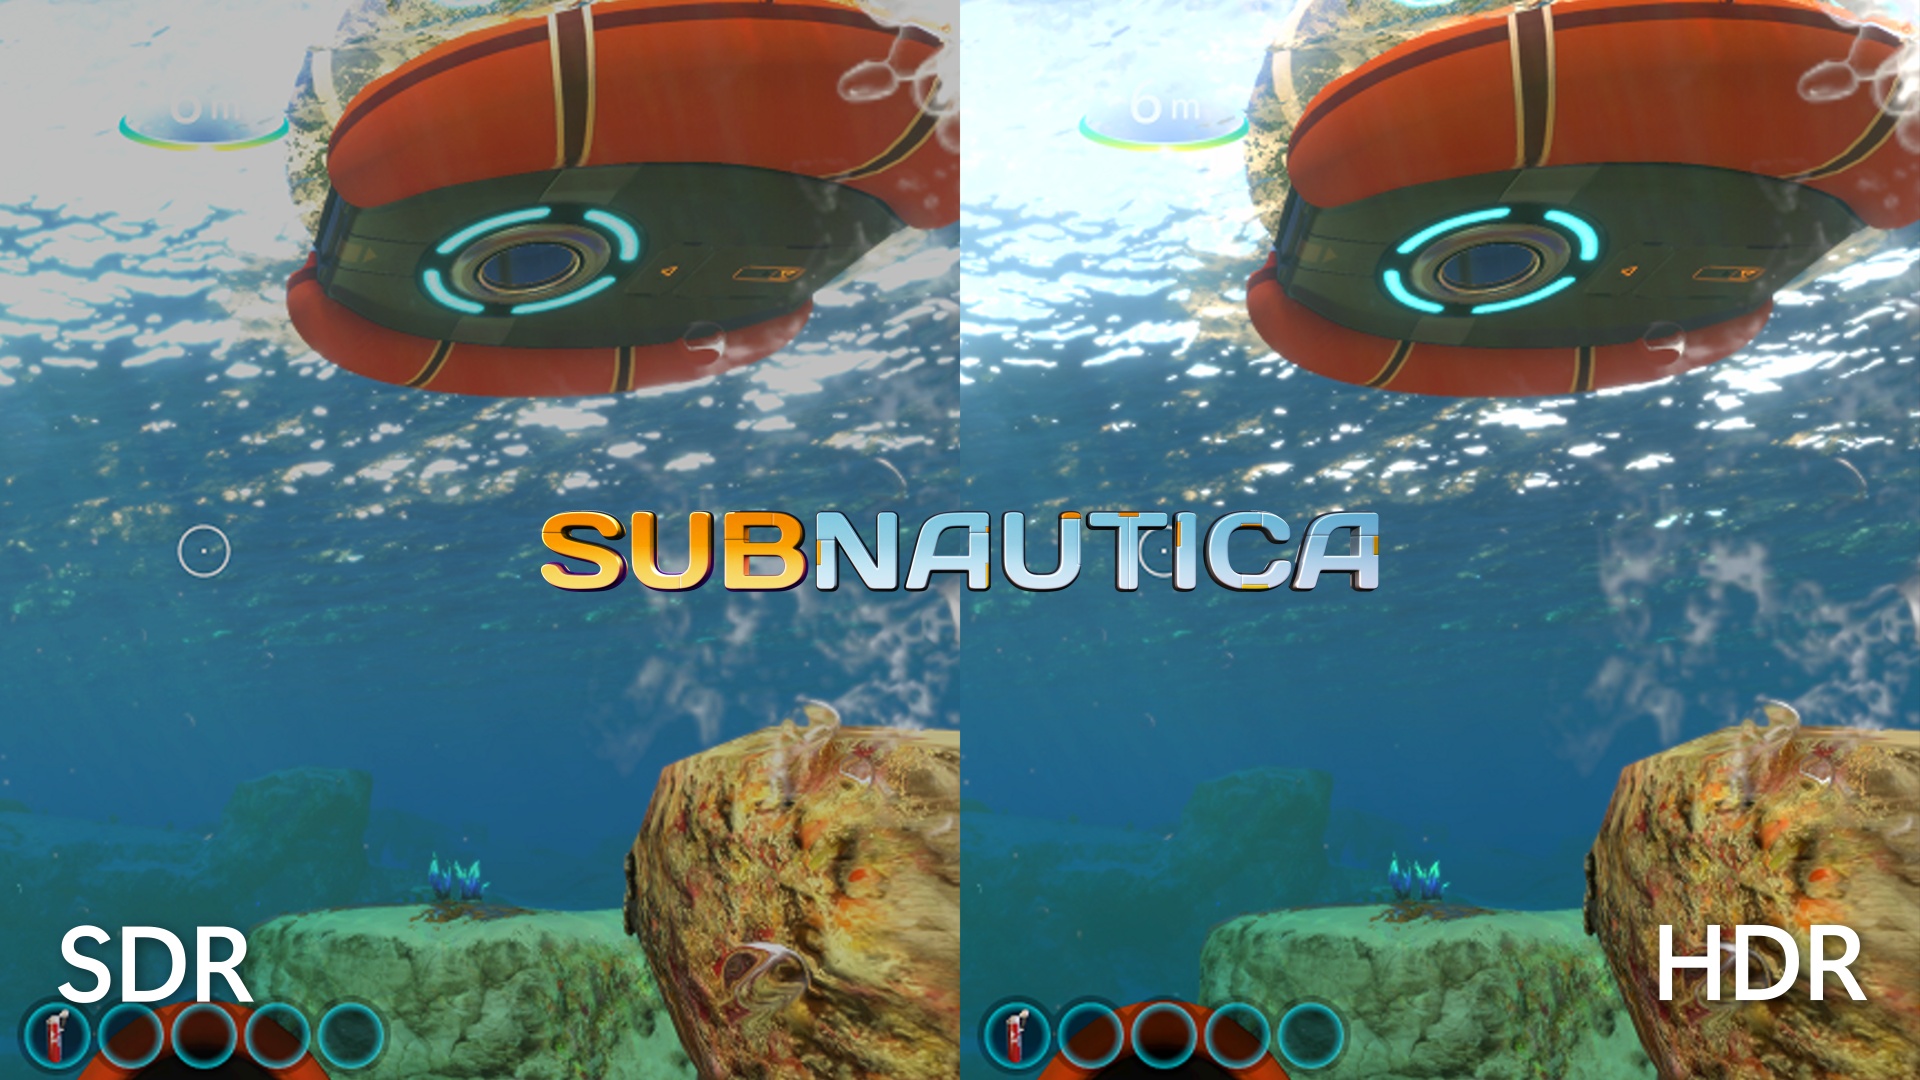 Subnautica HDR-Vergleichsscreenshot